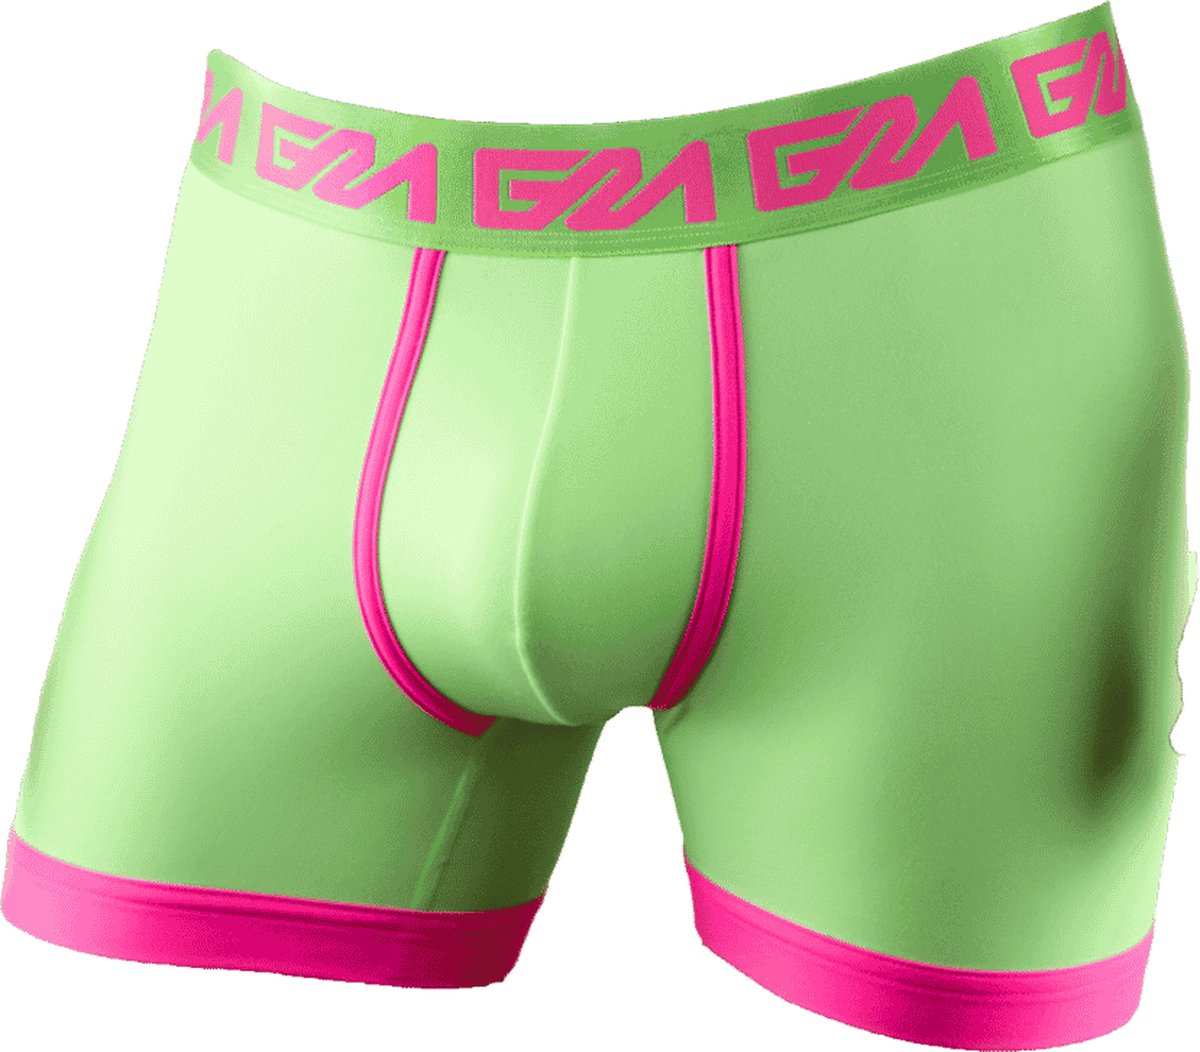 Garçon LINCOLN Boxershort - MAAT XL - Heren Ondergoed - Boxershort voor Man - Mannen Boxershort